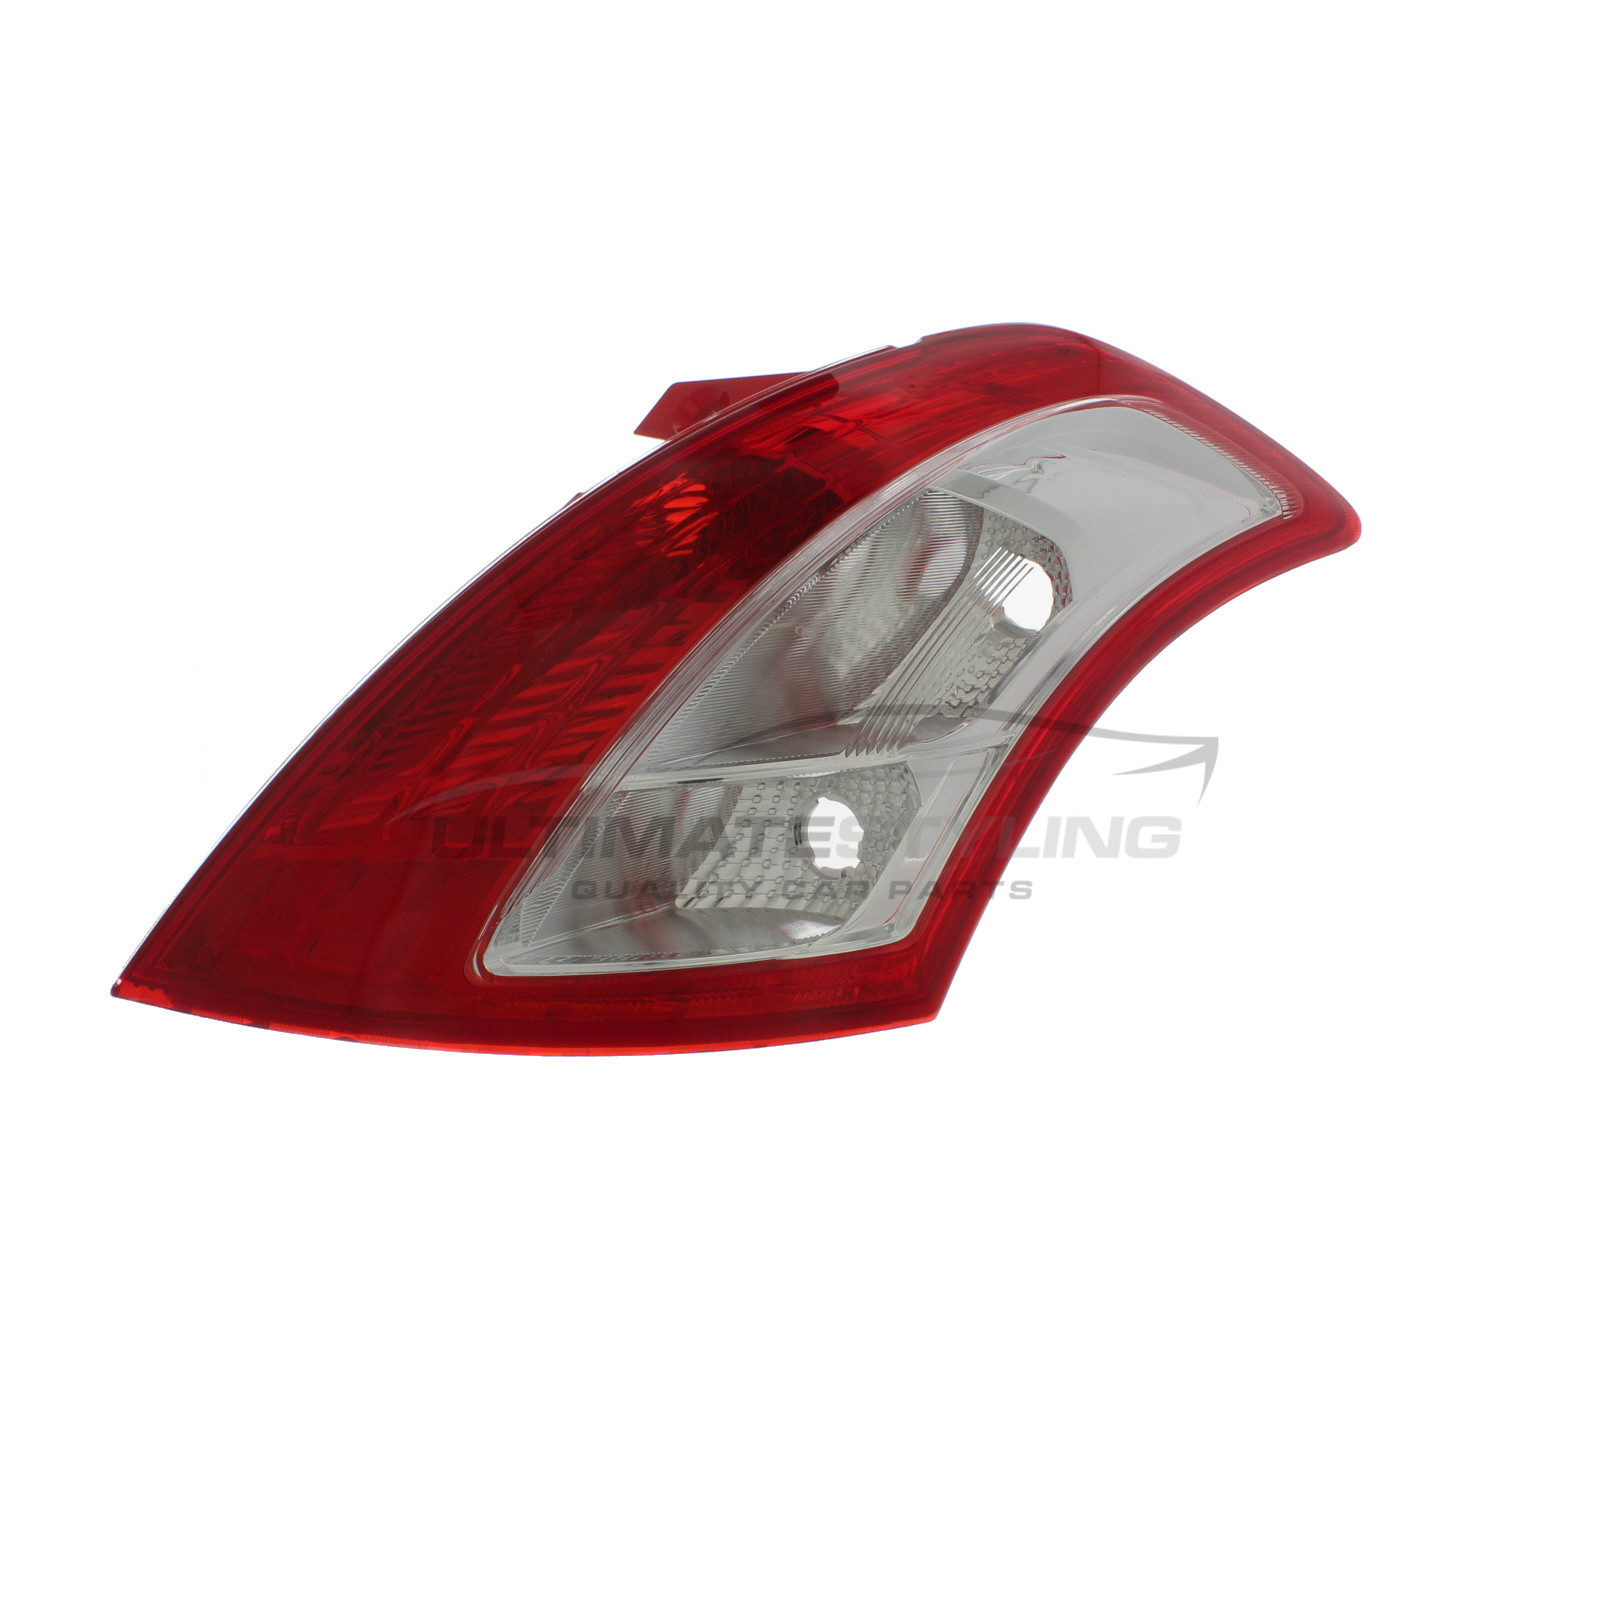 Rear Light / Tail Light for Suzuki Swift